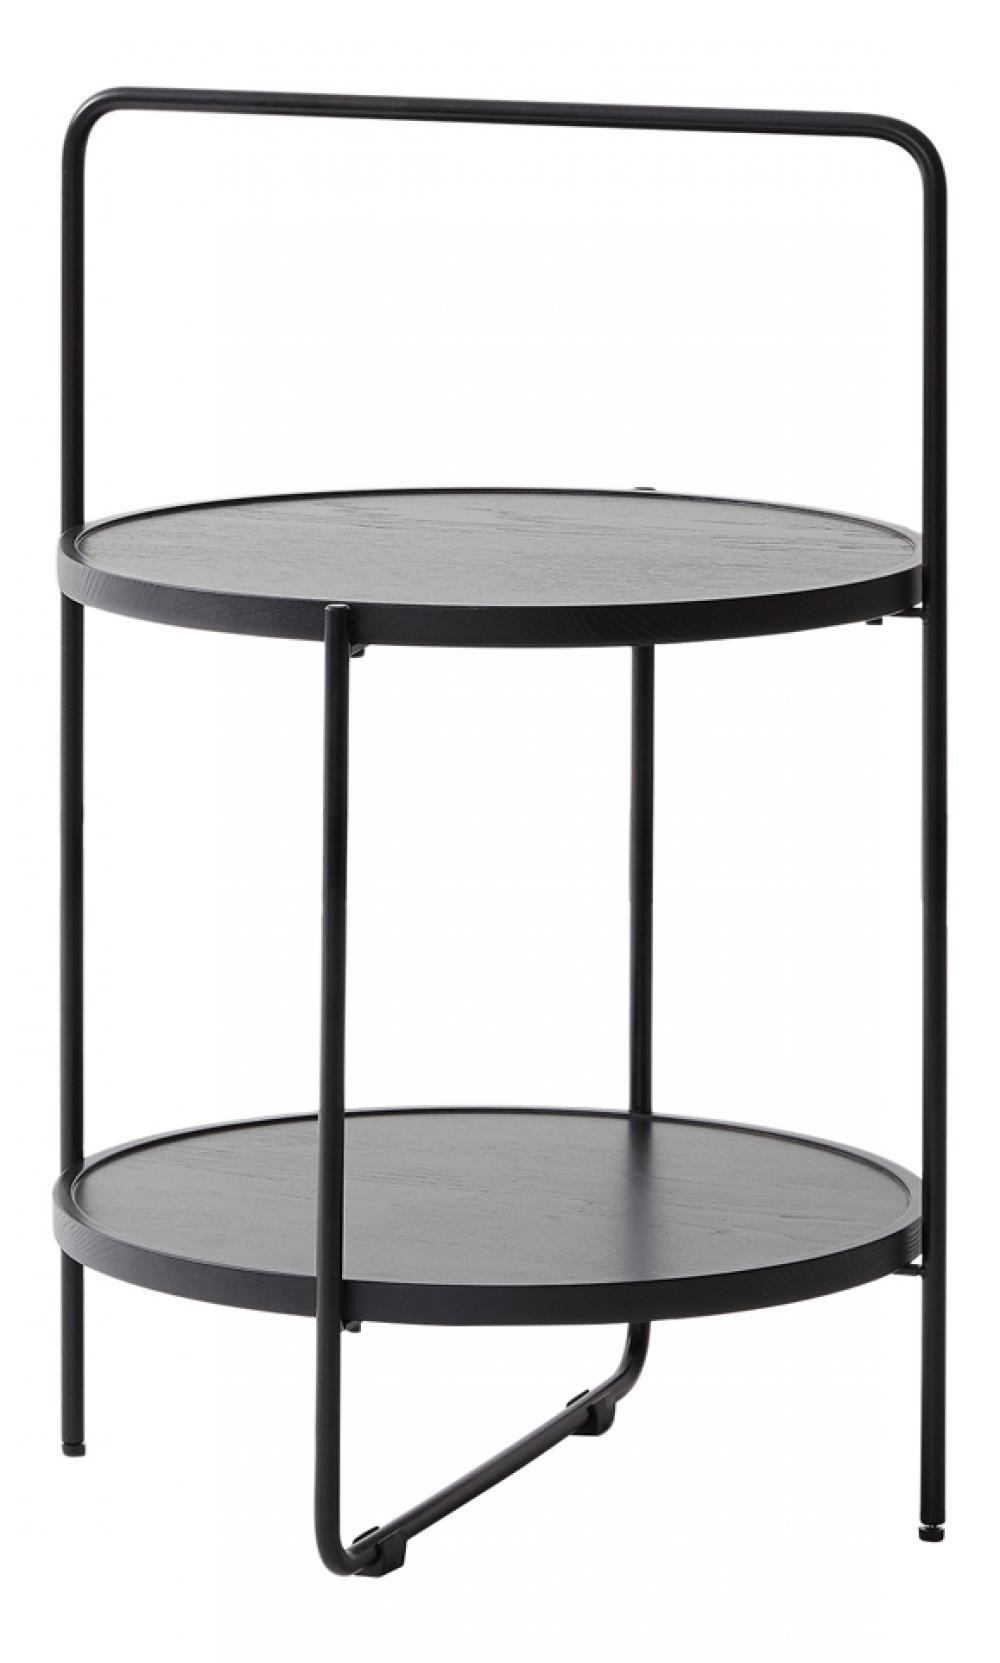 Andersen Furniture - Tray table Ø46 cm - Black tray (4-159001)